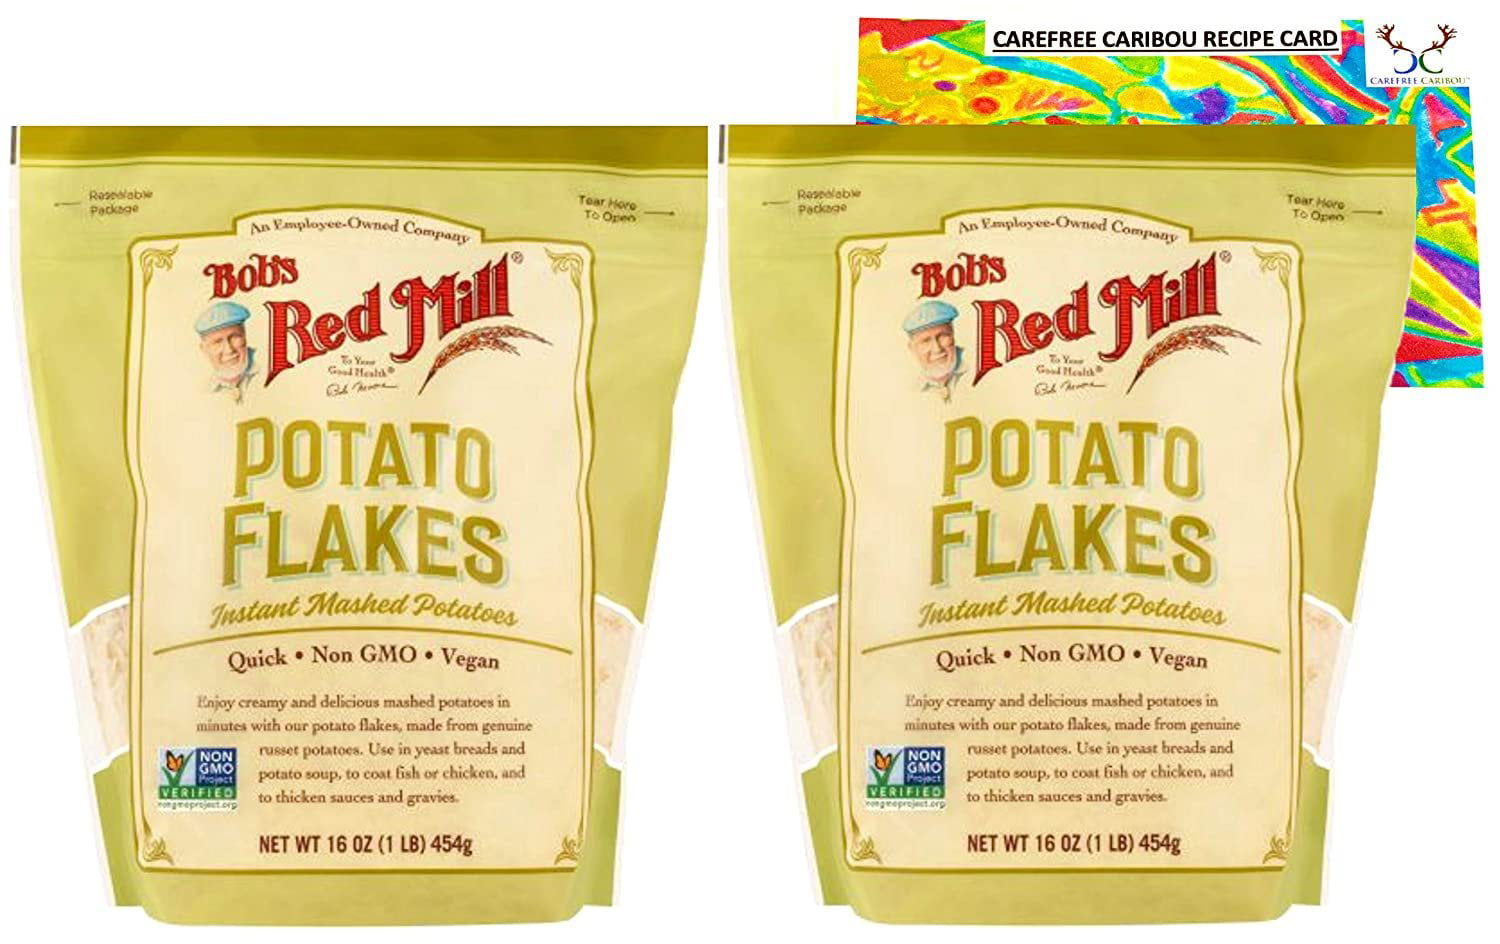 Bobs Red Mill Potato Flakes Bundle. Includes (2) 16oz Packages of Bobs Red Mill Potato Flakes Instant Mashed Potatoes and a Caribou Potato Flake Cookies Recipe Card! - Walmart.com